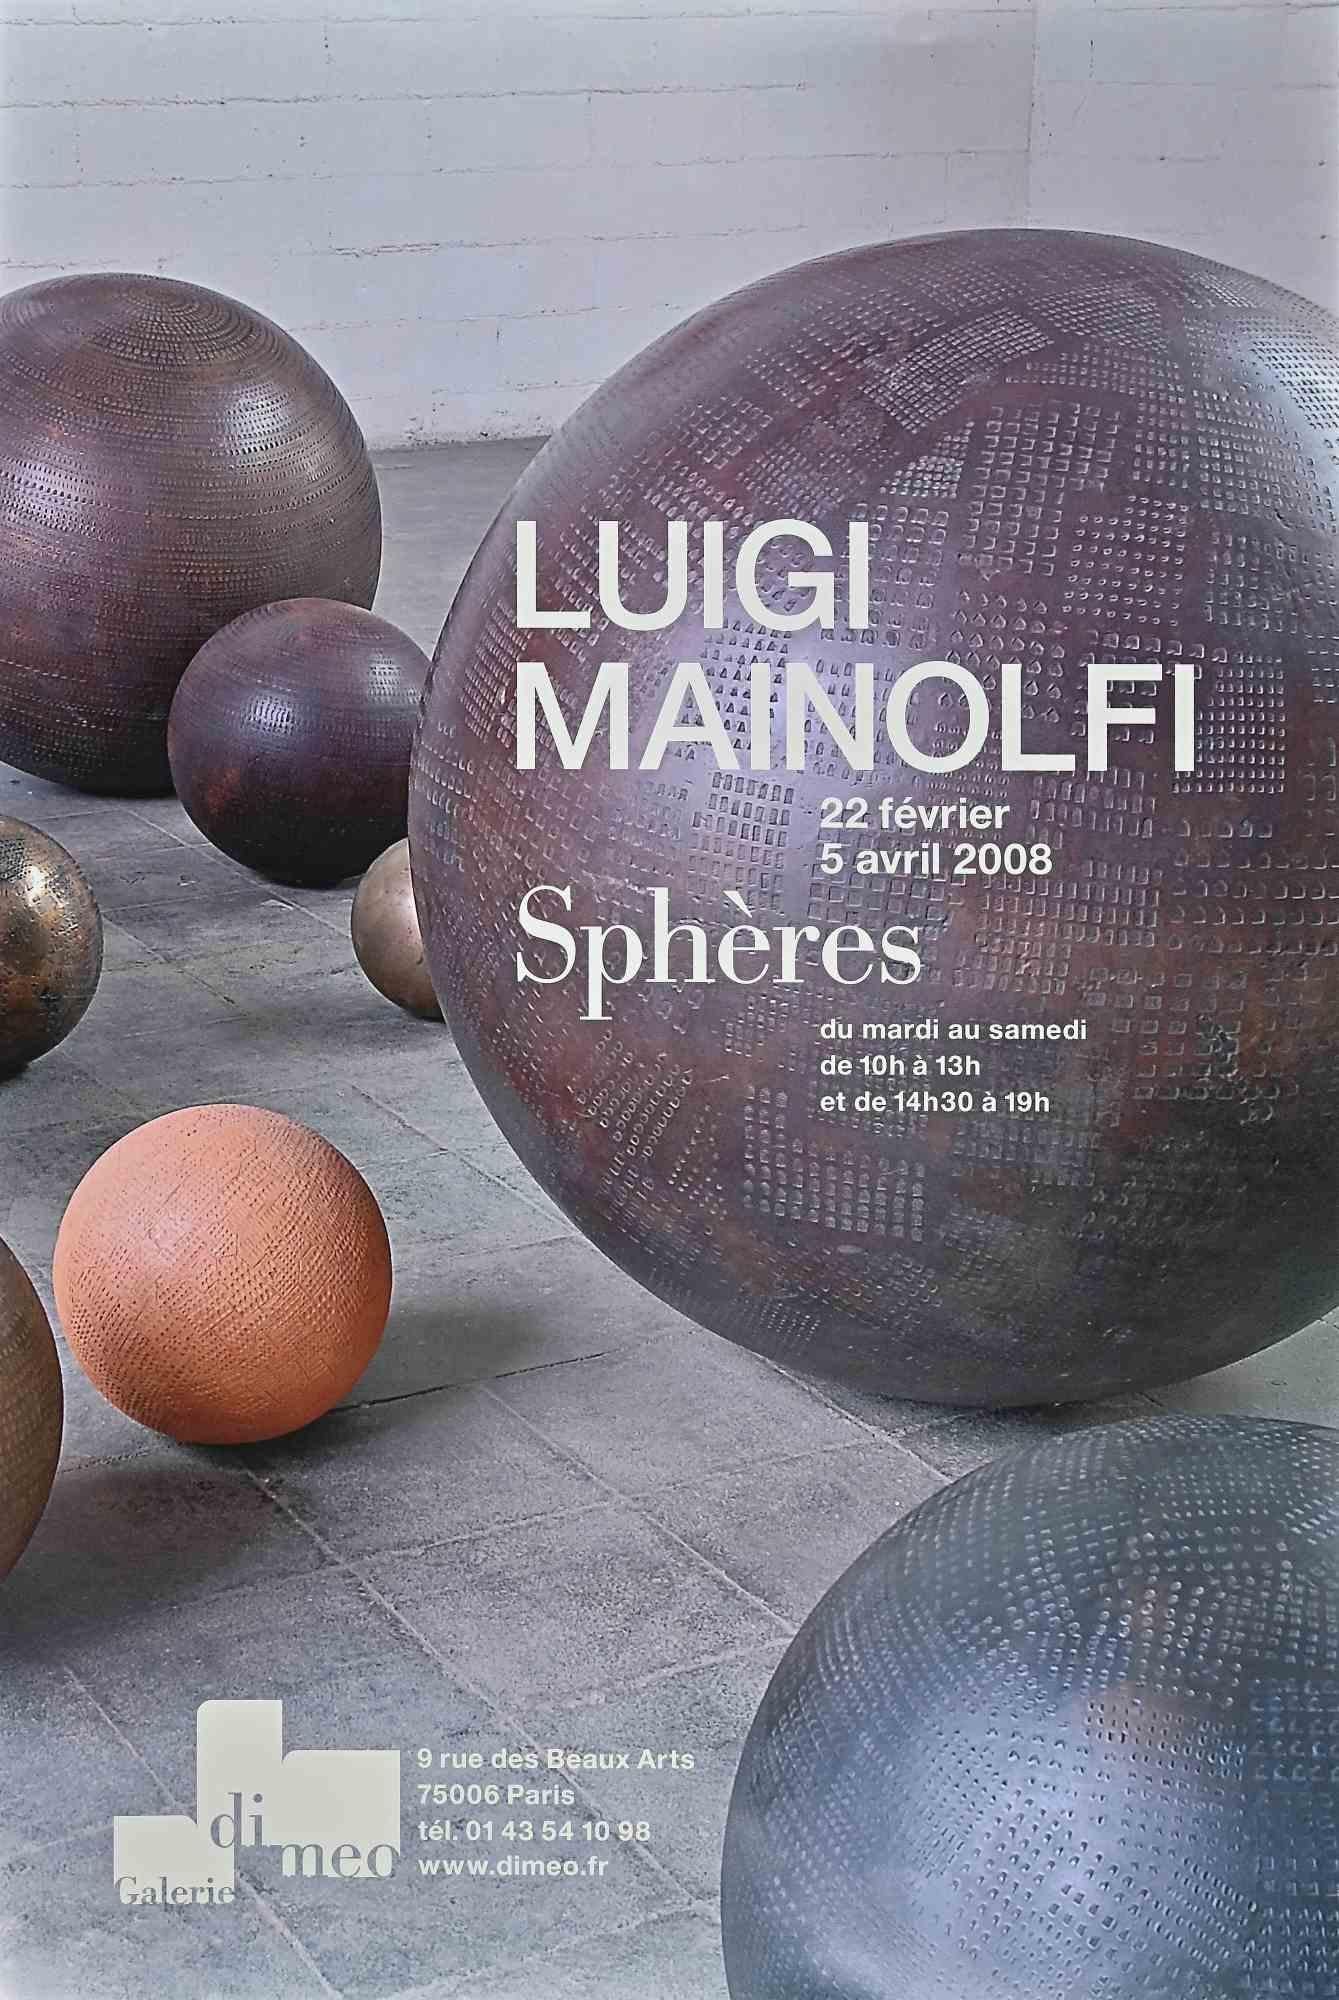 Exposition de Luigi Mainolfi - Poster vintage - 2008